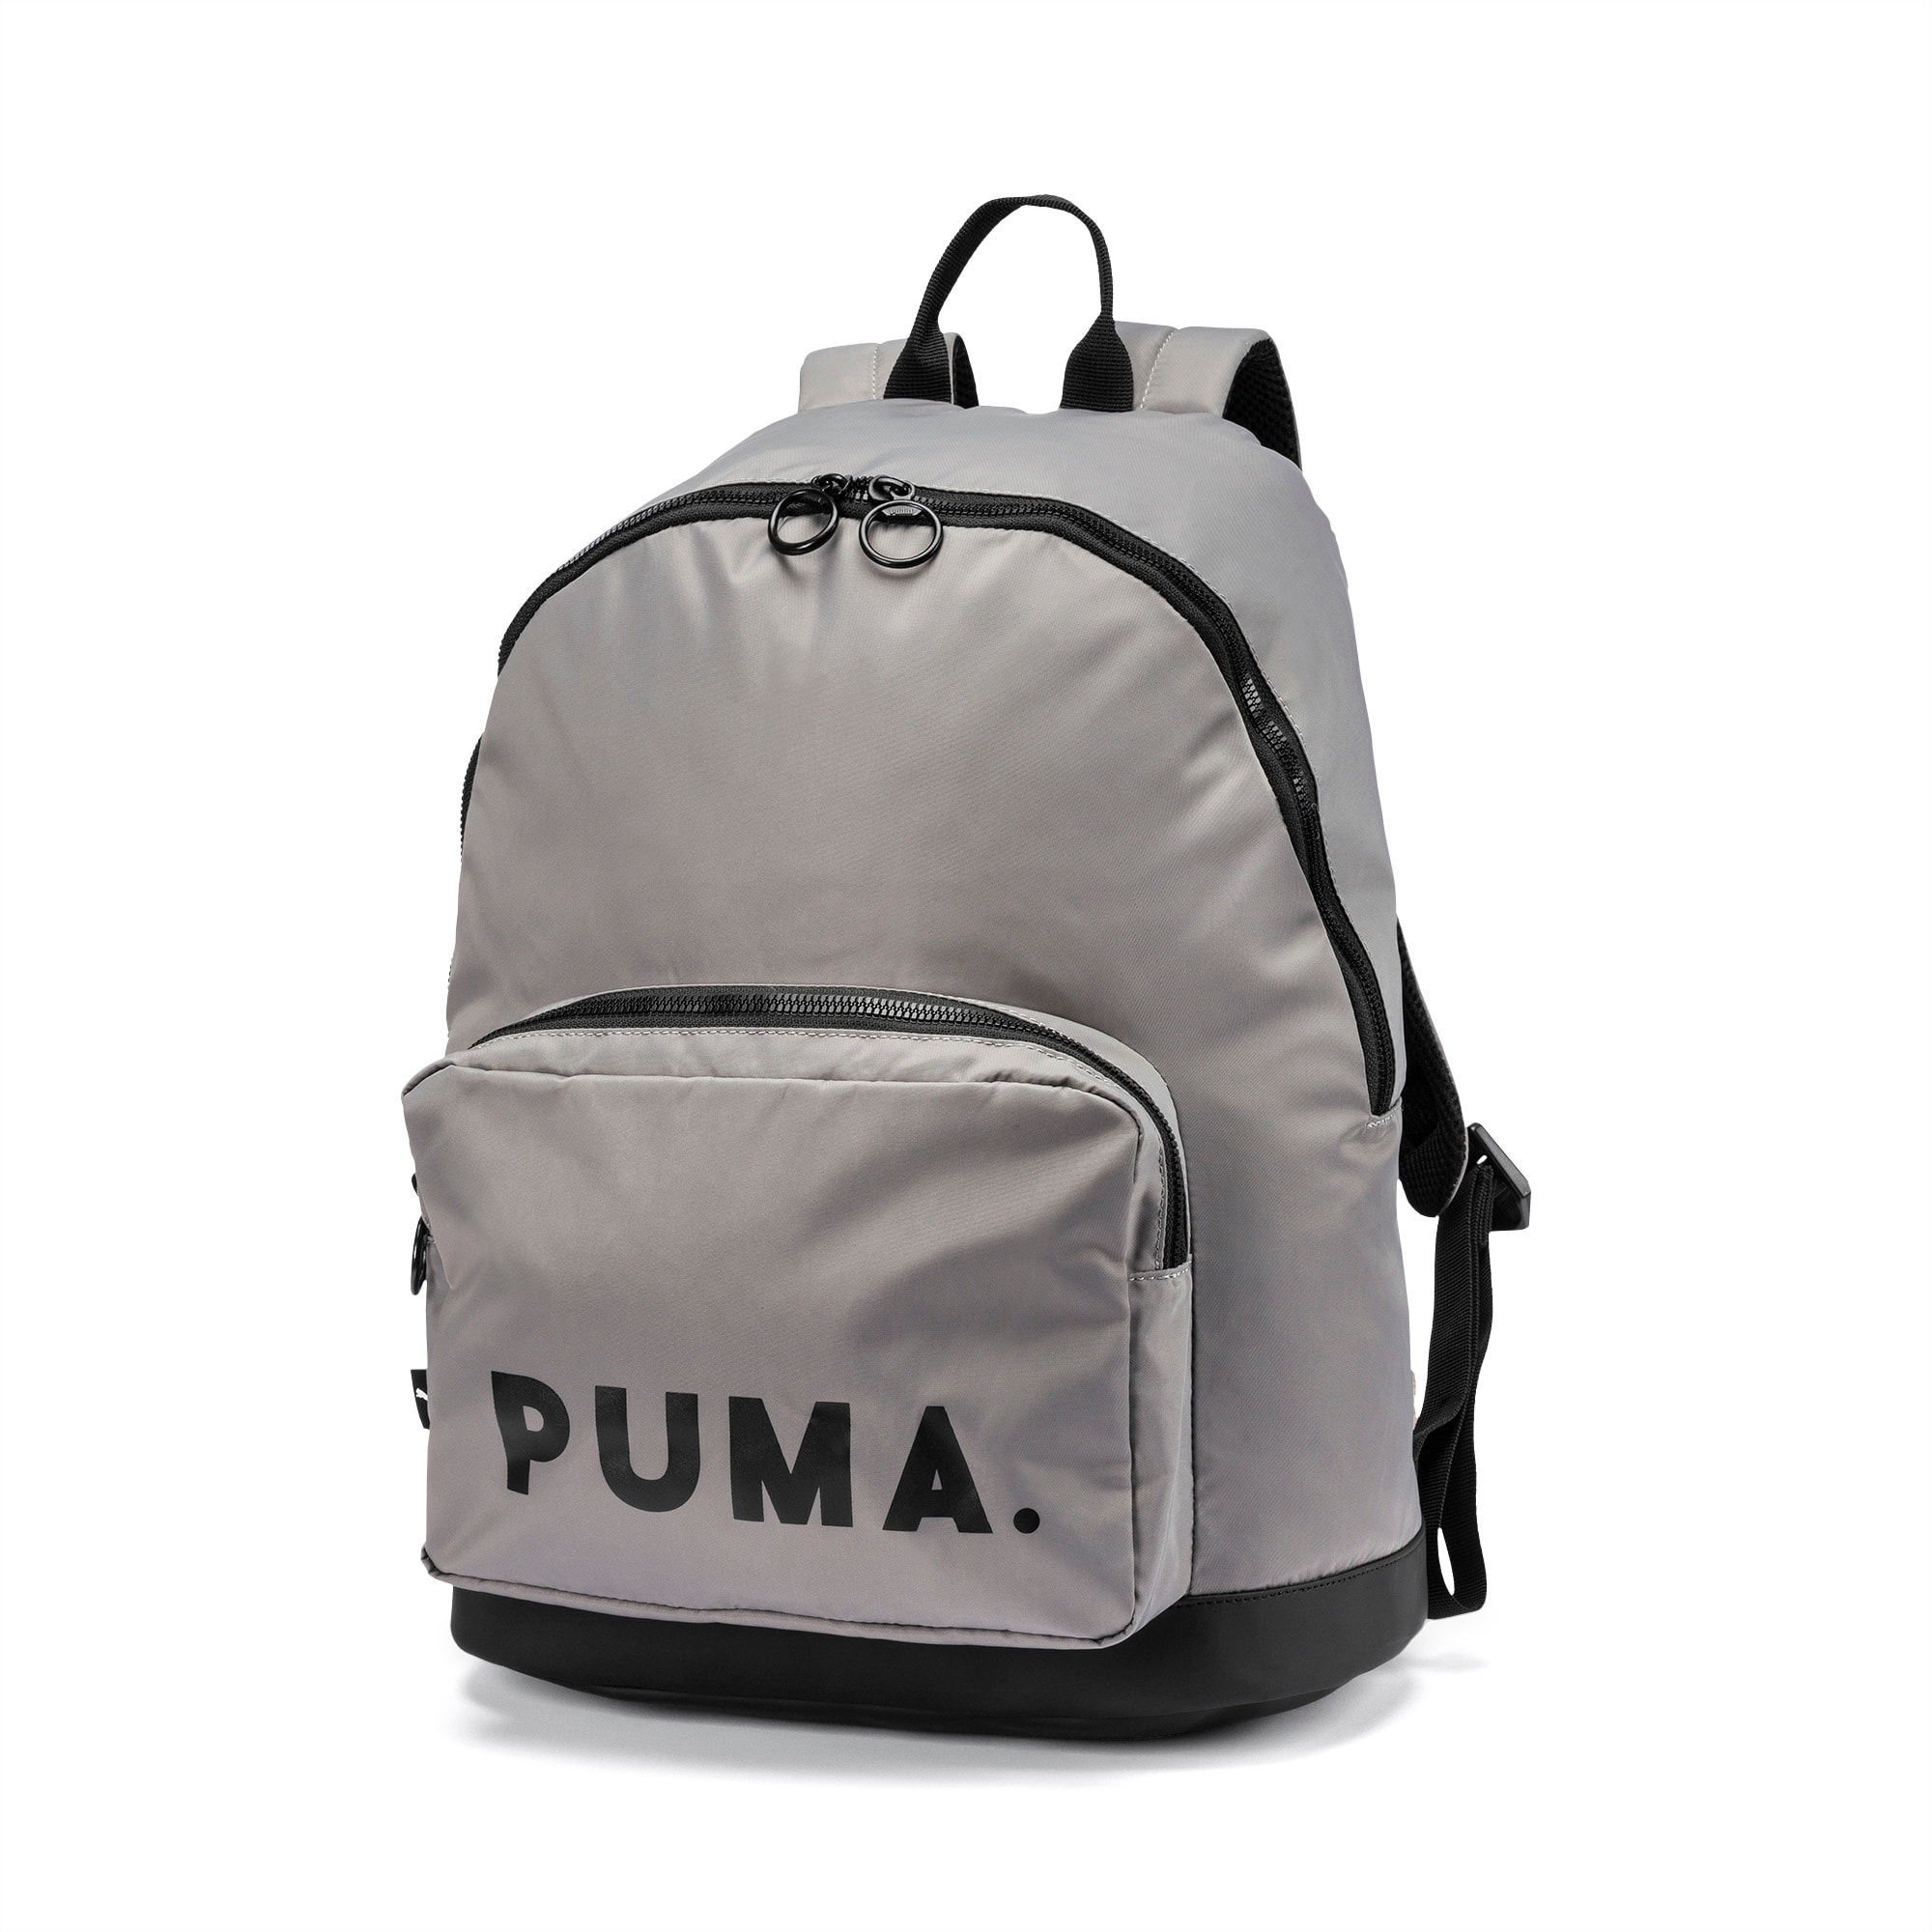 puma original backpack